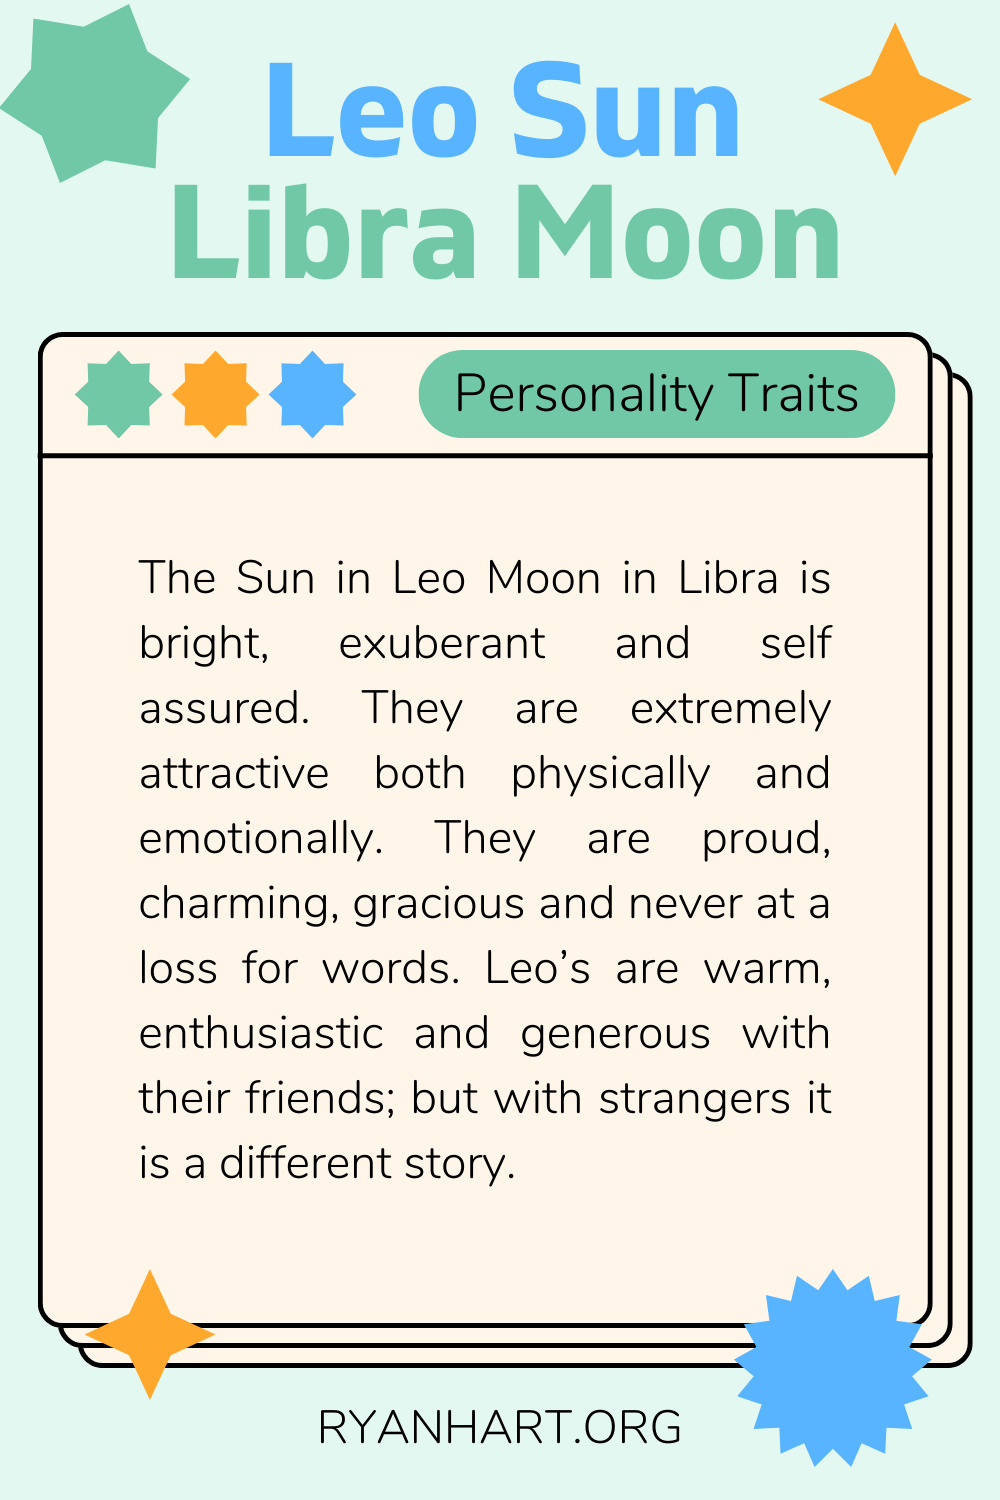 Leo Sun Libra Moon Description